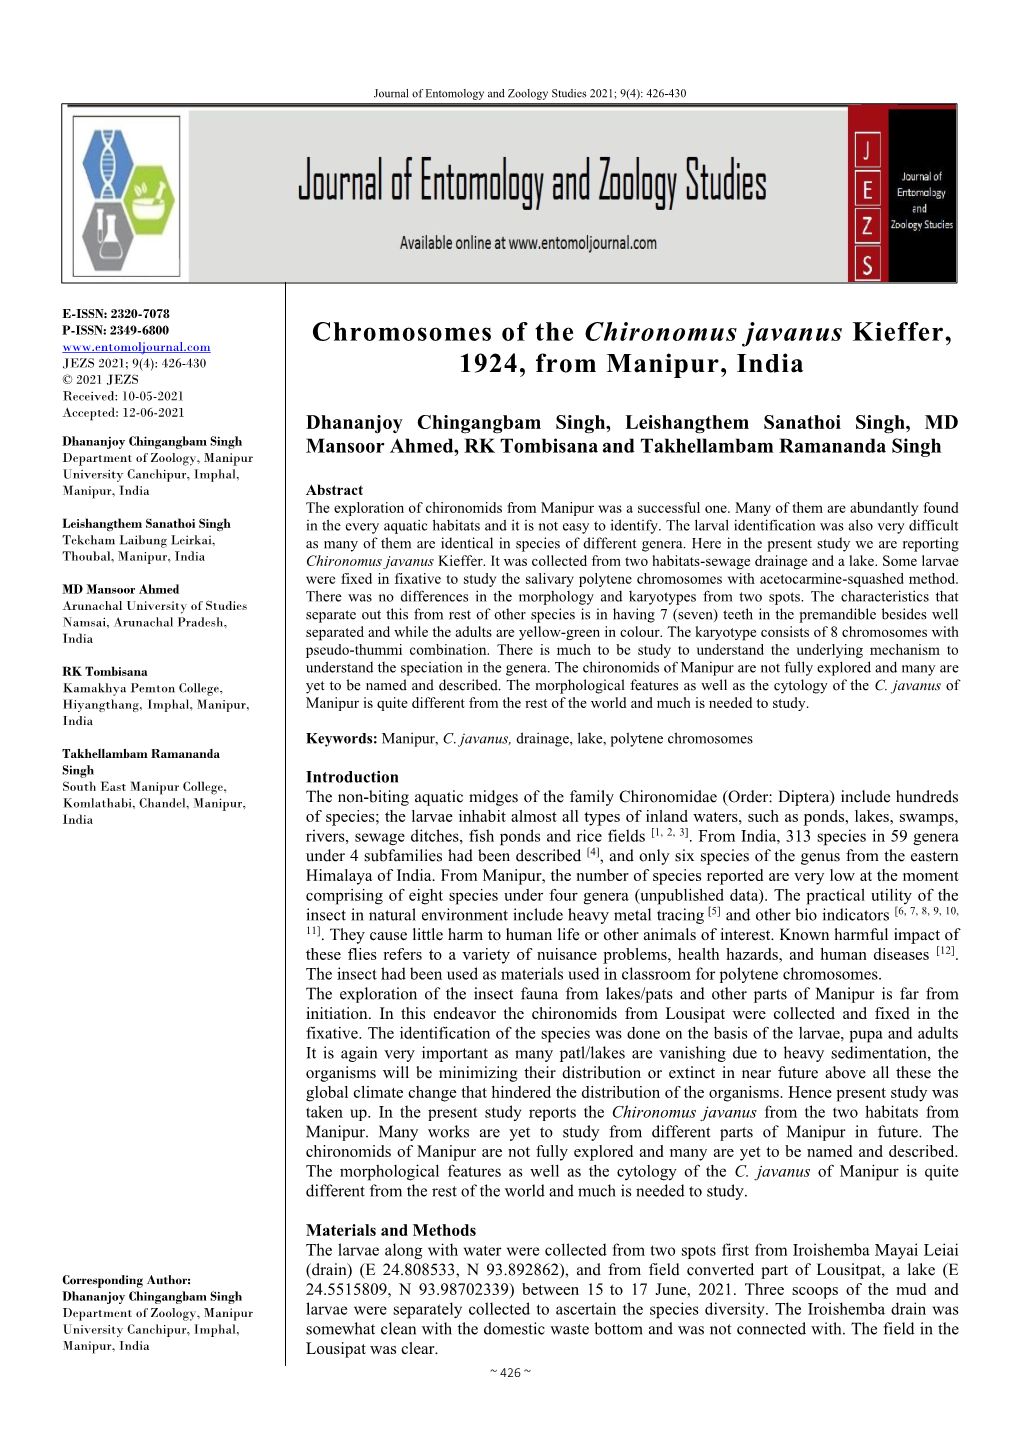 Chromosomes of the Chironomus Javanus Kieffer, 1924, from Manipur